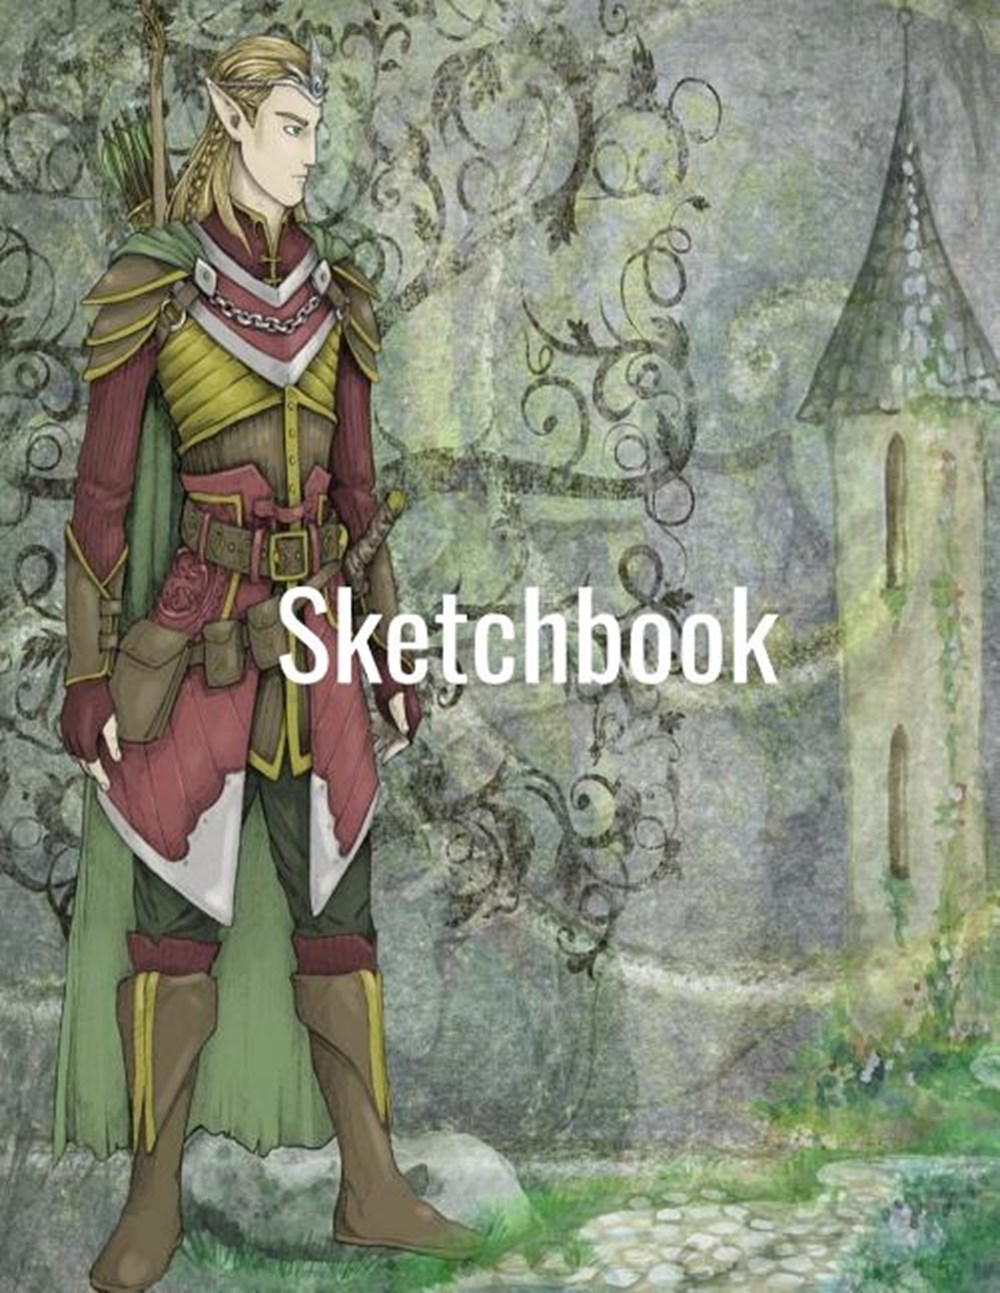 Sketchbook Artist Sketch Pad For Drawing 100 Blank Pages For Sketching: Art Gift For Women Men Kids